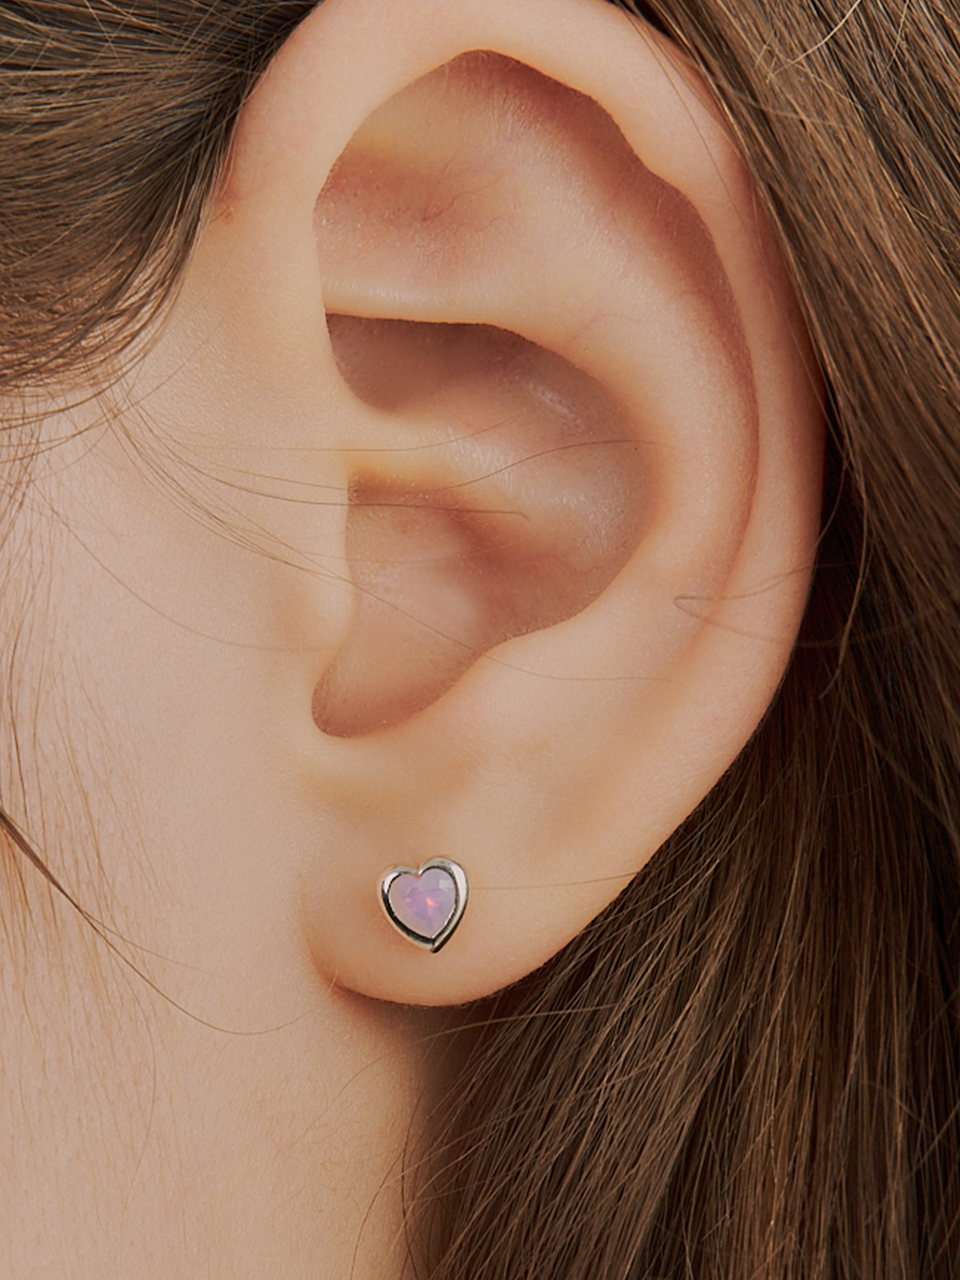 every heart cubic earring